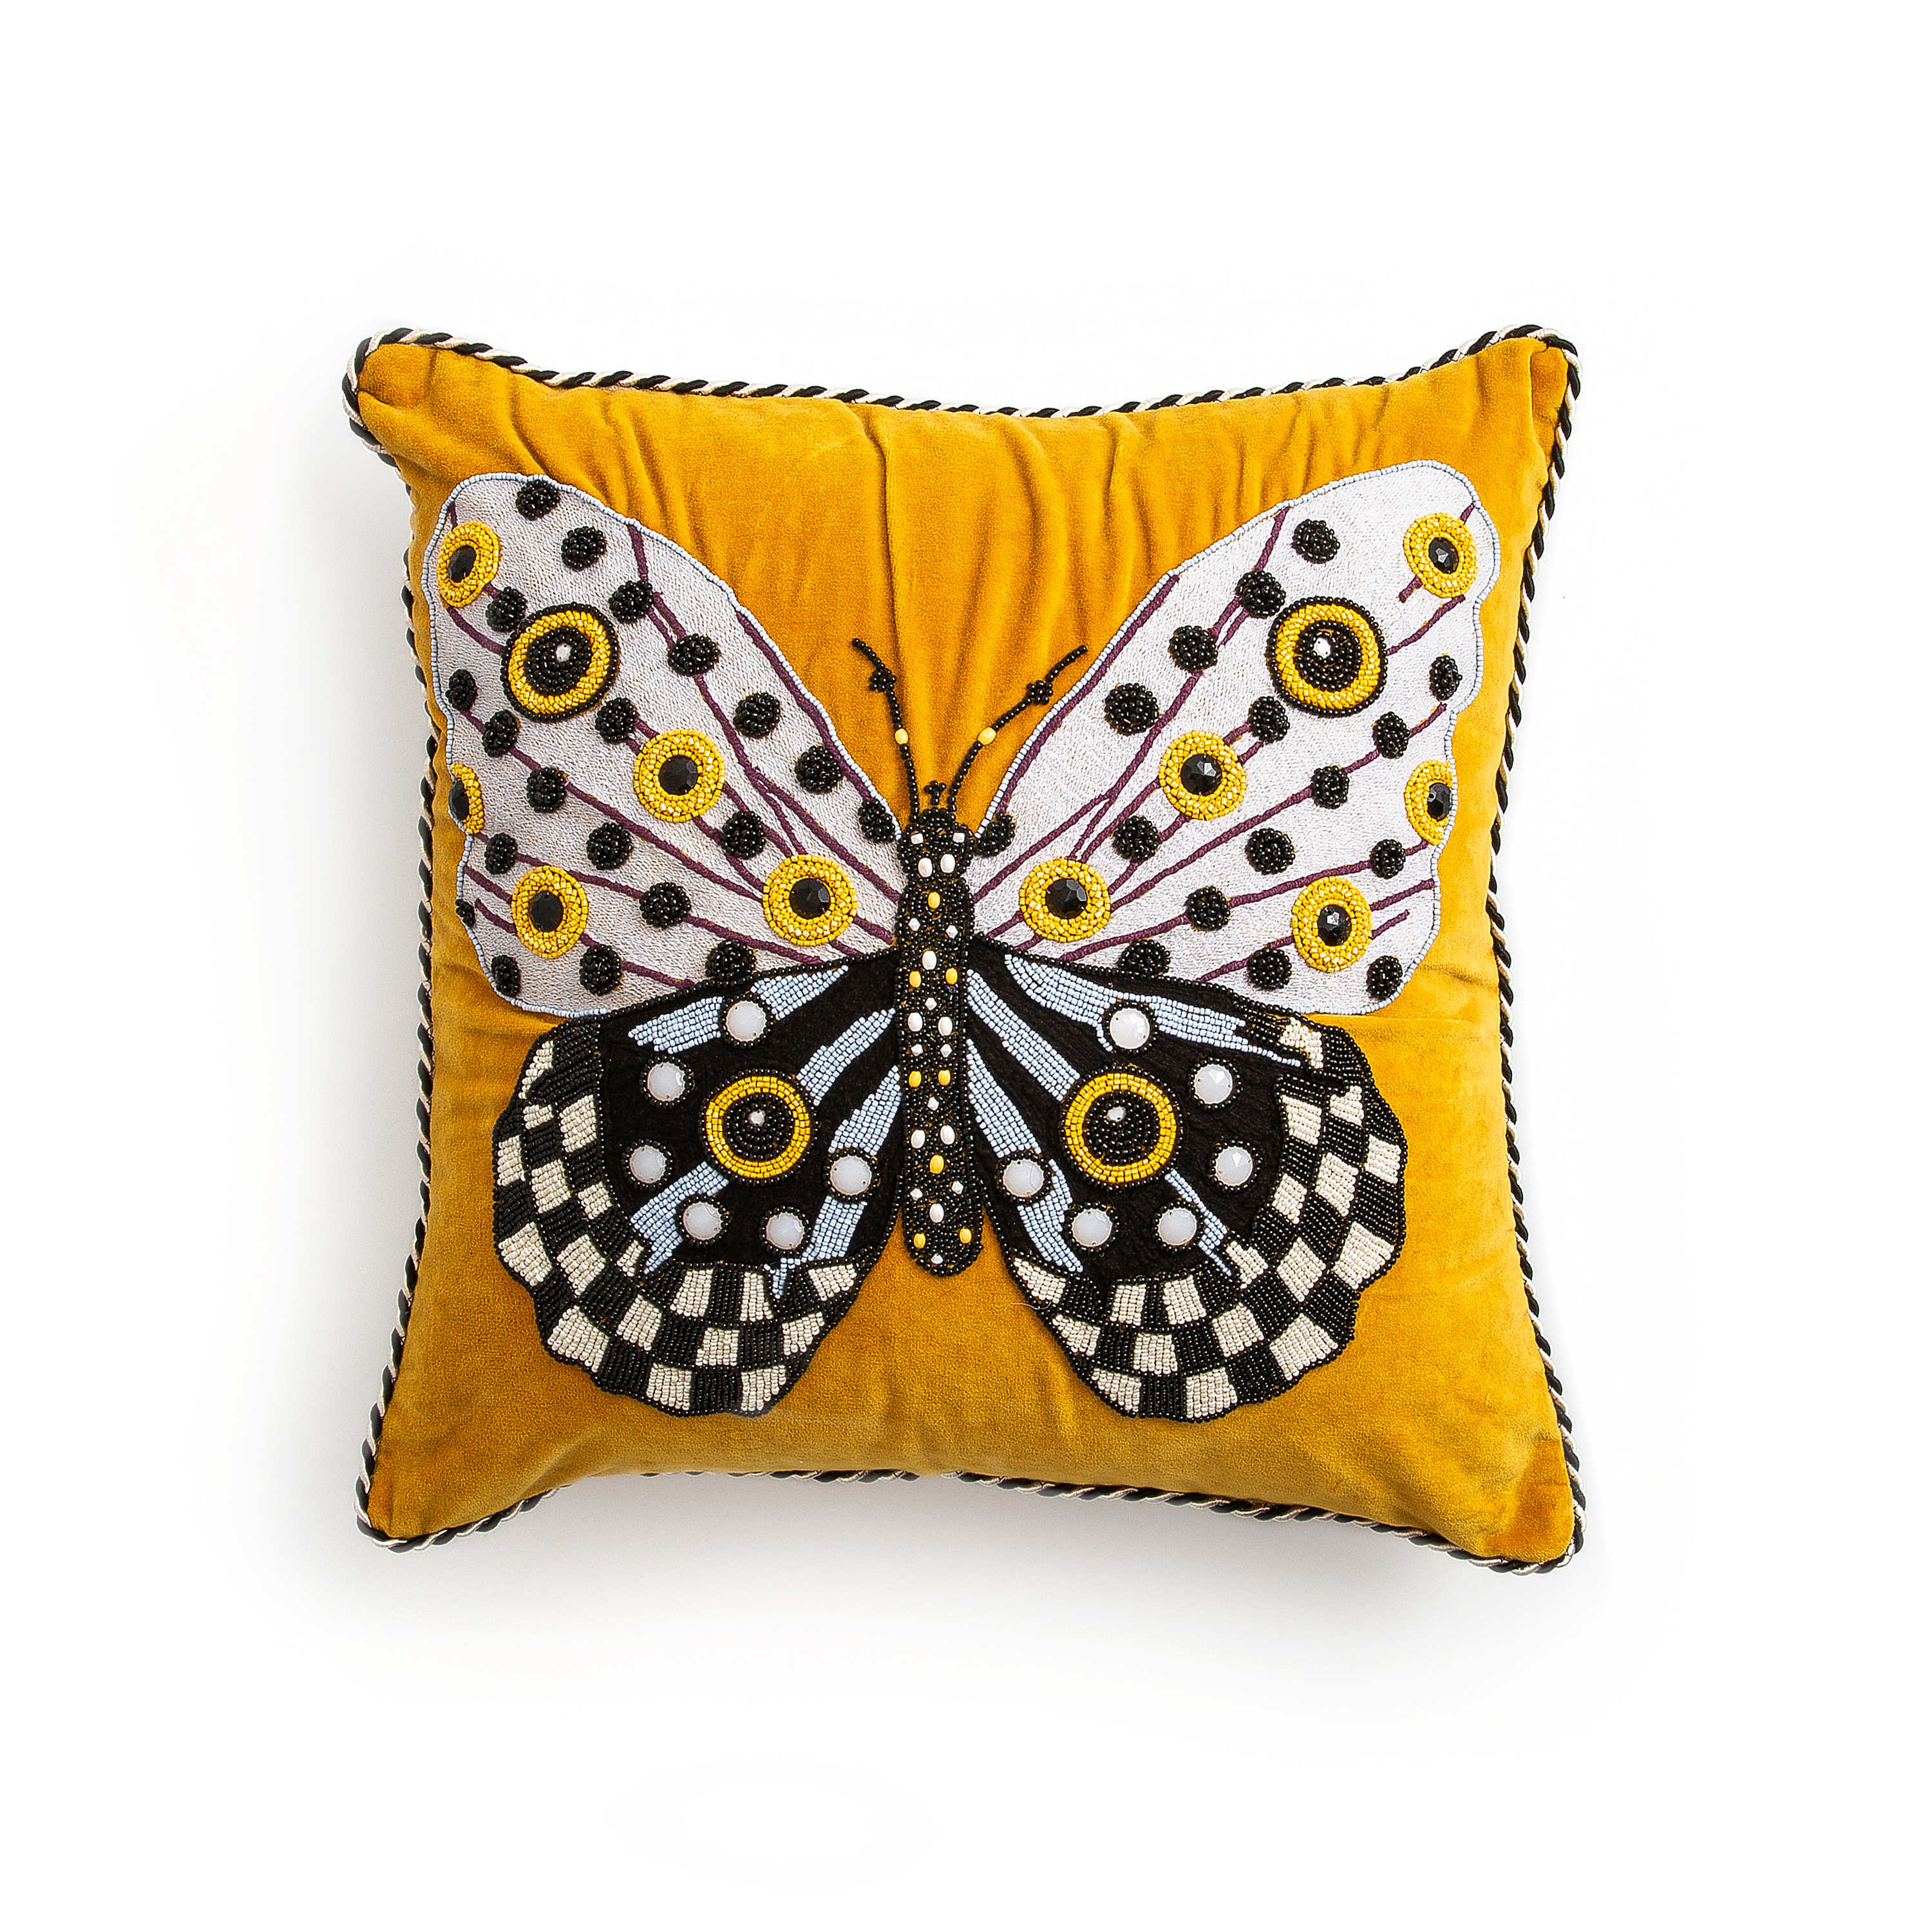 Spot On Butterfly Throw Pillow mackenzie-childs Panama 0